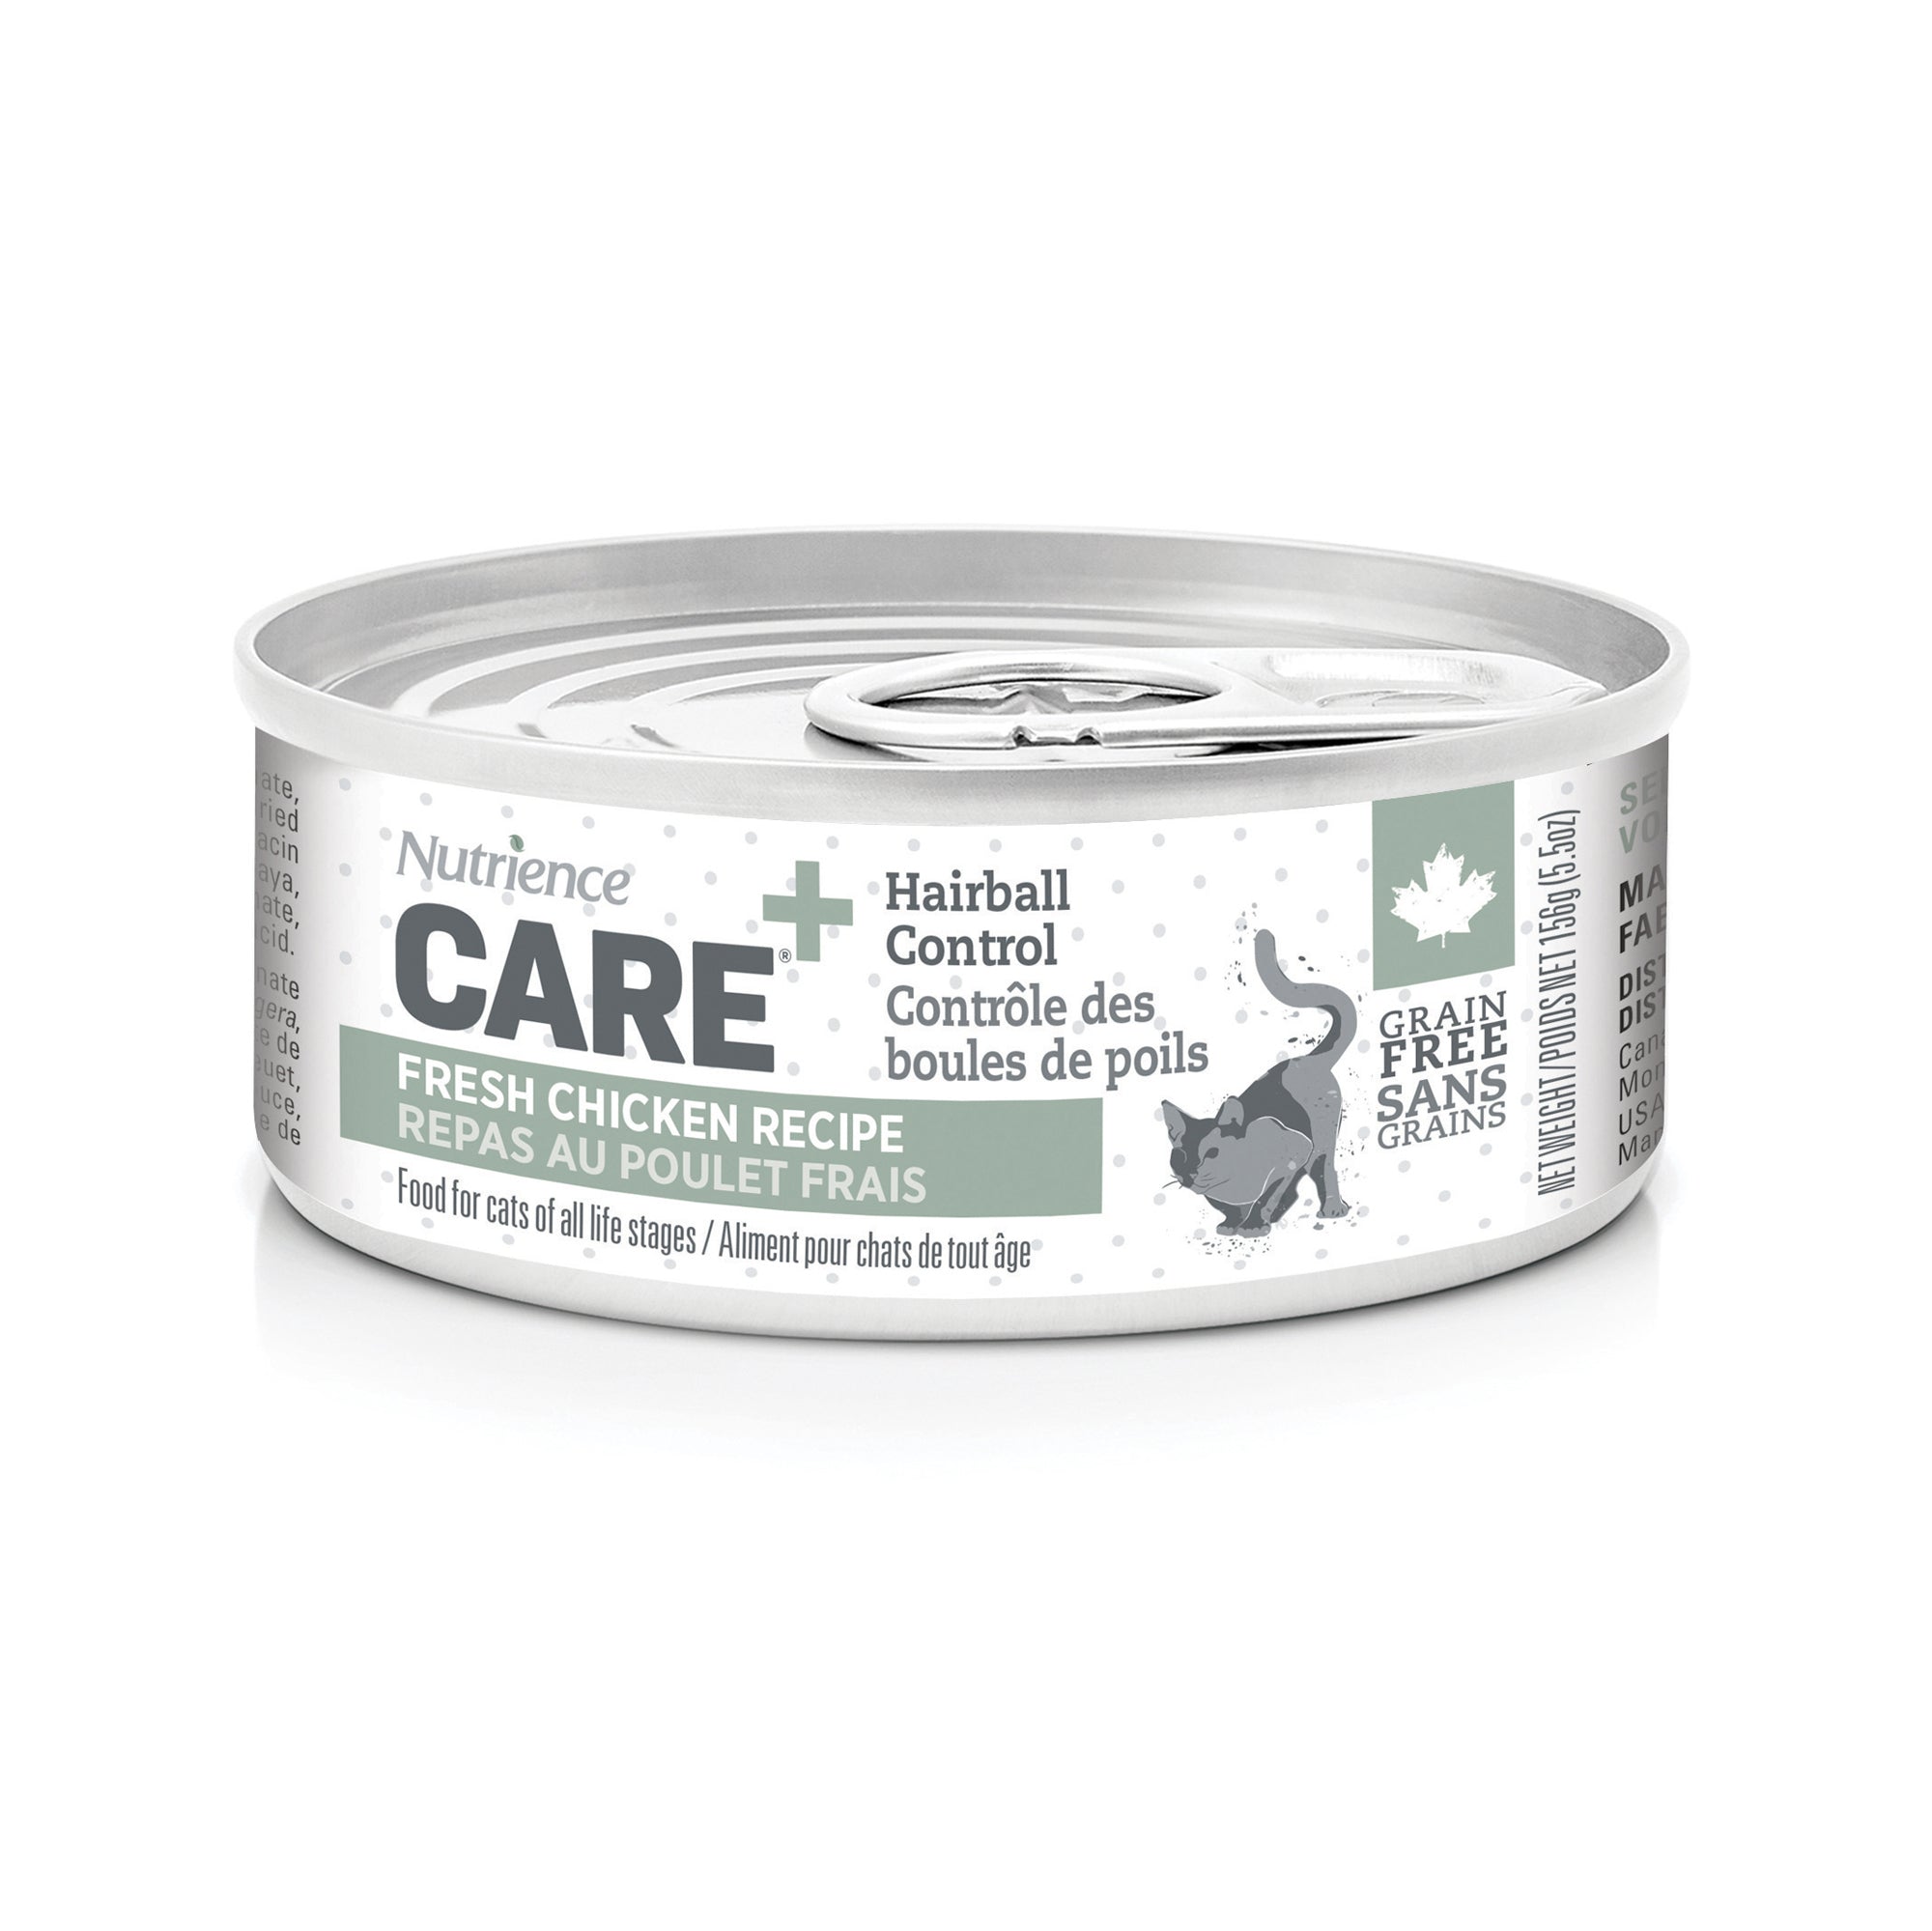 Nutrience Care Hairball Control Pâté for Cats - Fresh Chicken Recipe - 156 g (5.5 oz)